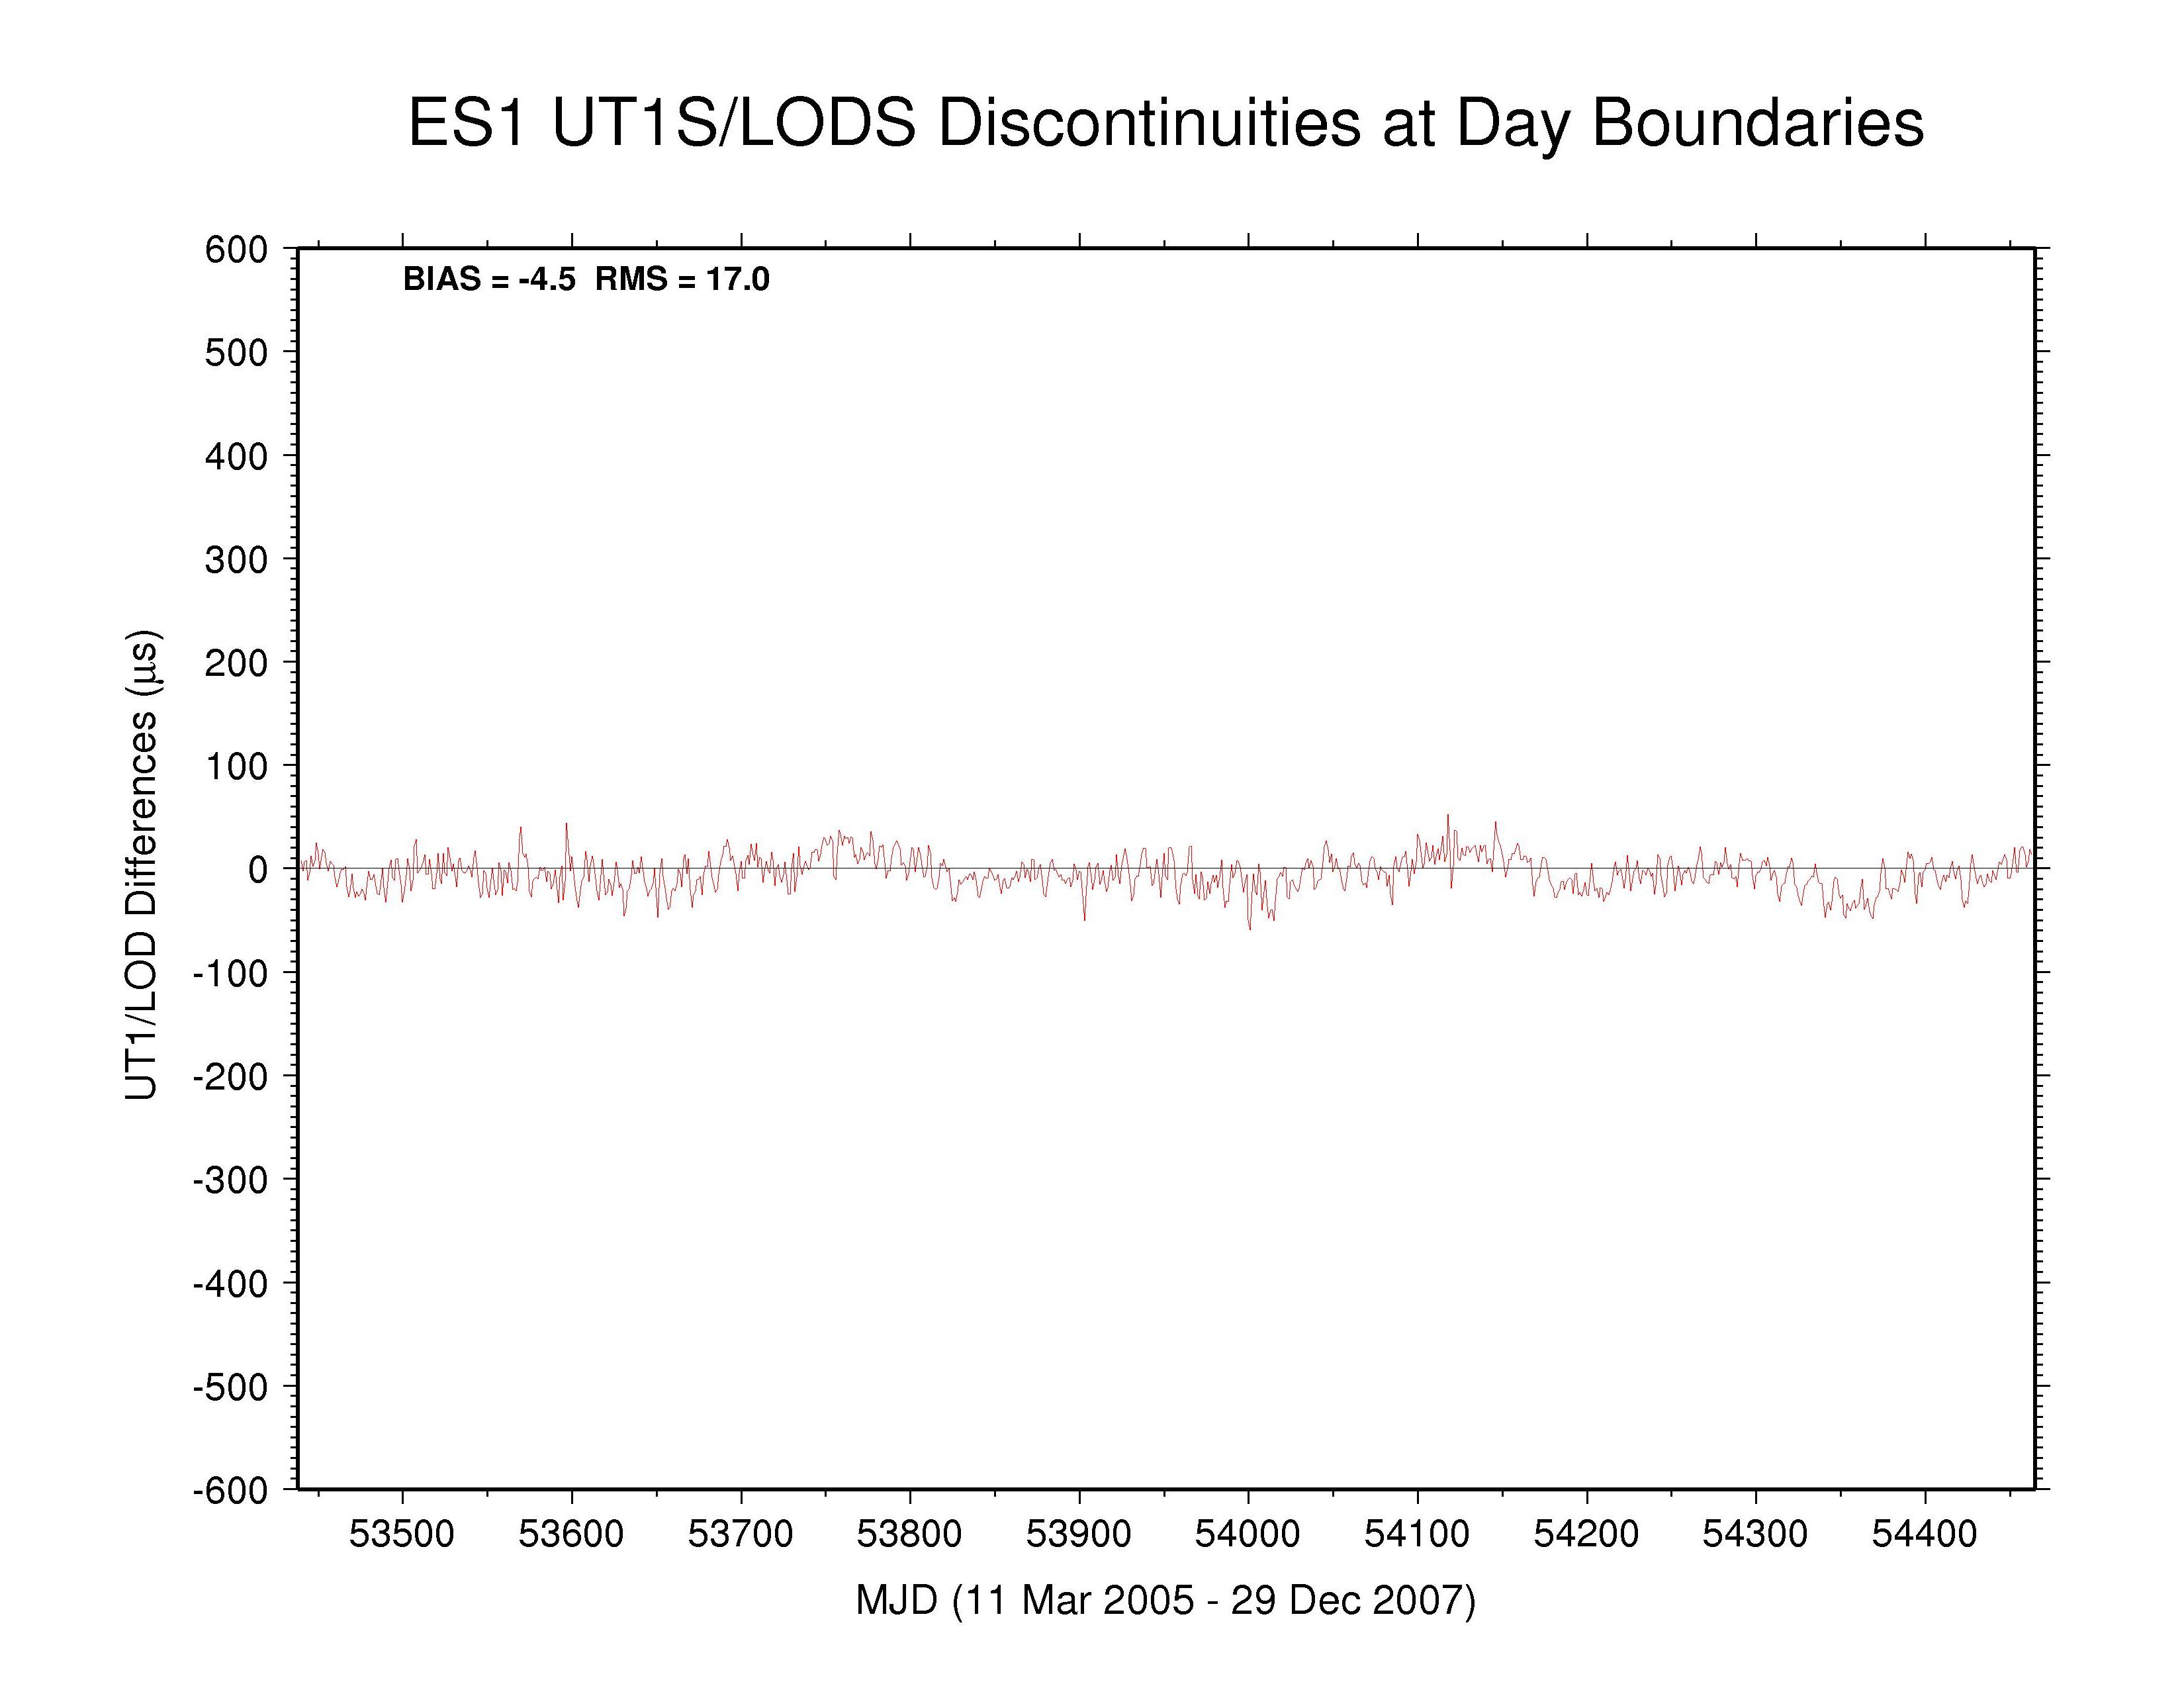 ESA LOD discontinuities